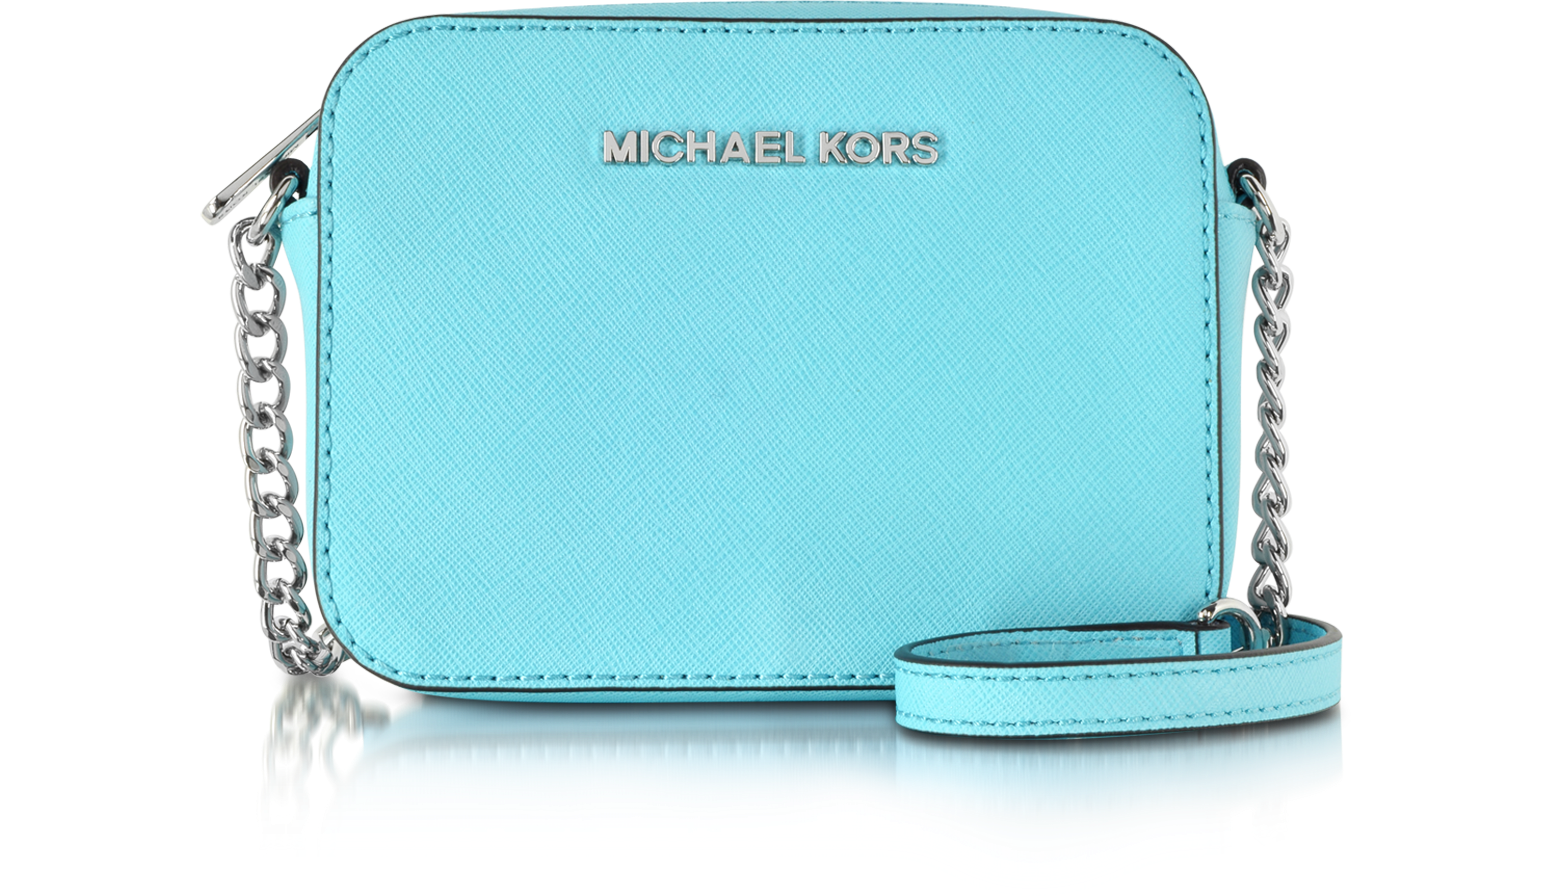 michael kors turquoise purse